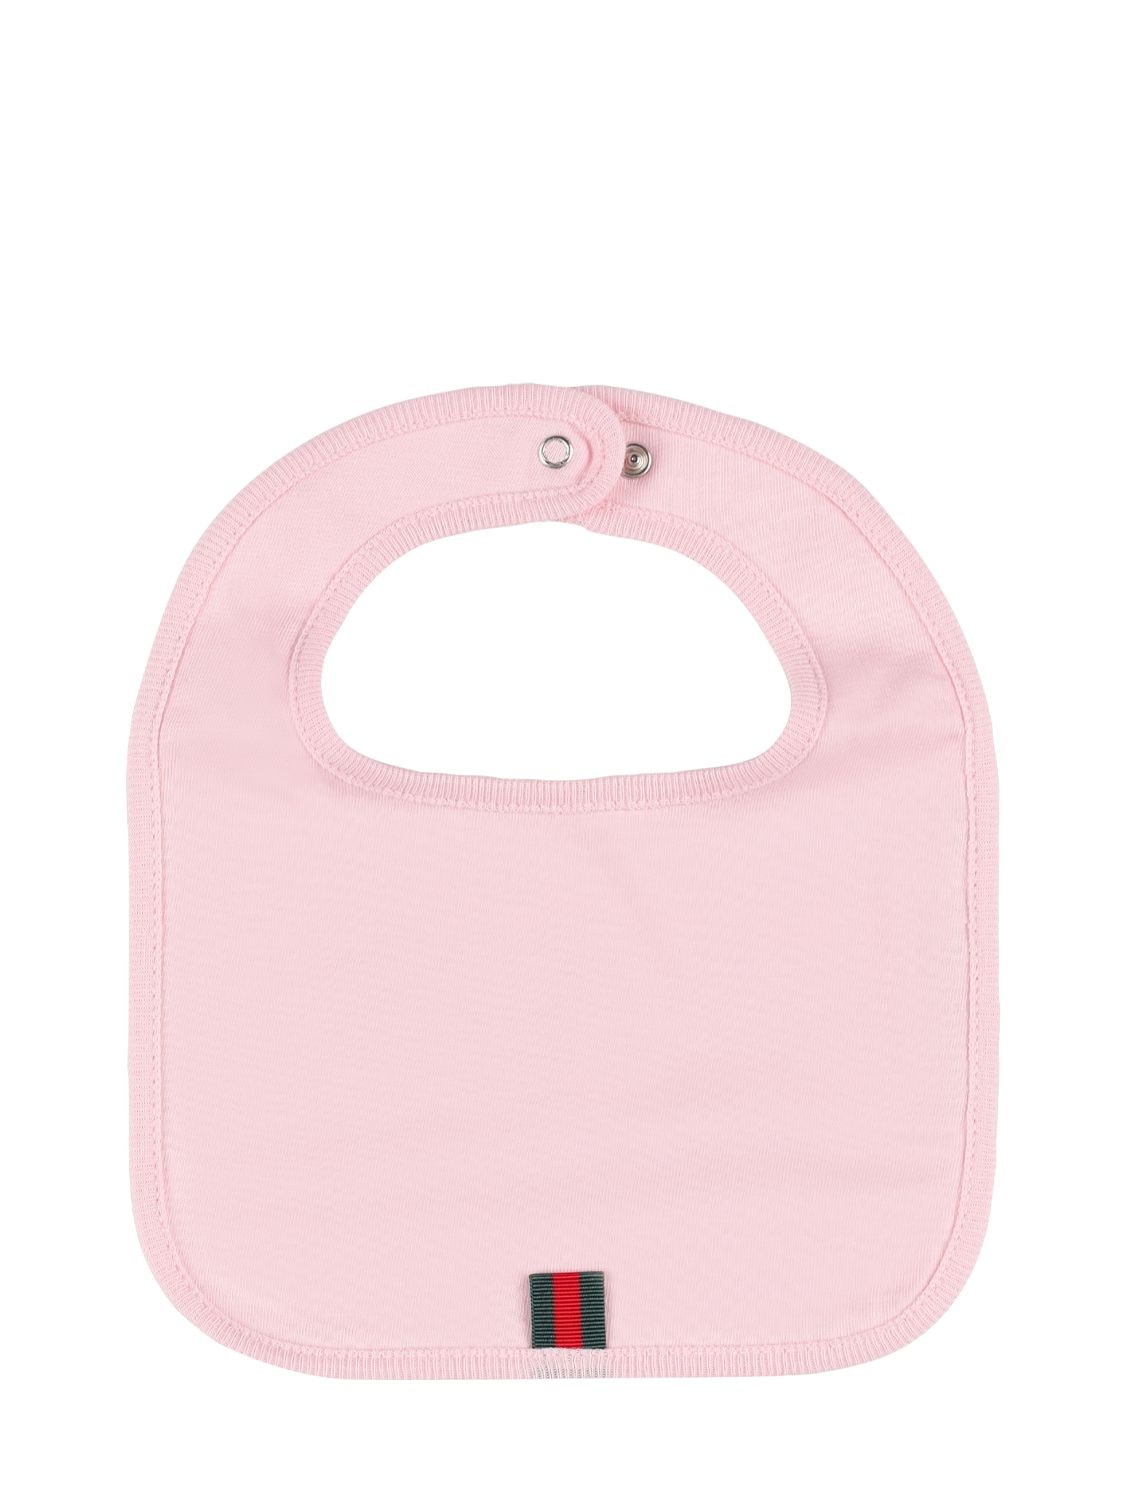 Shop Gucci Logo Print Cotton Romper, Hat & Bib In Light Pink